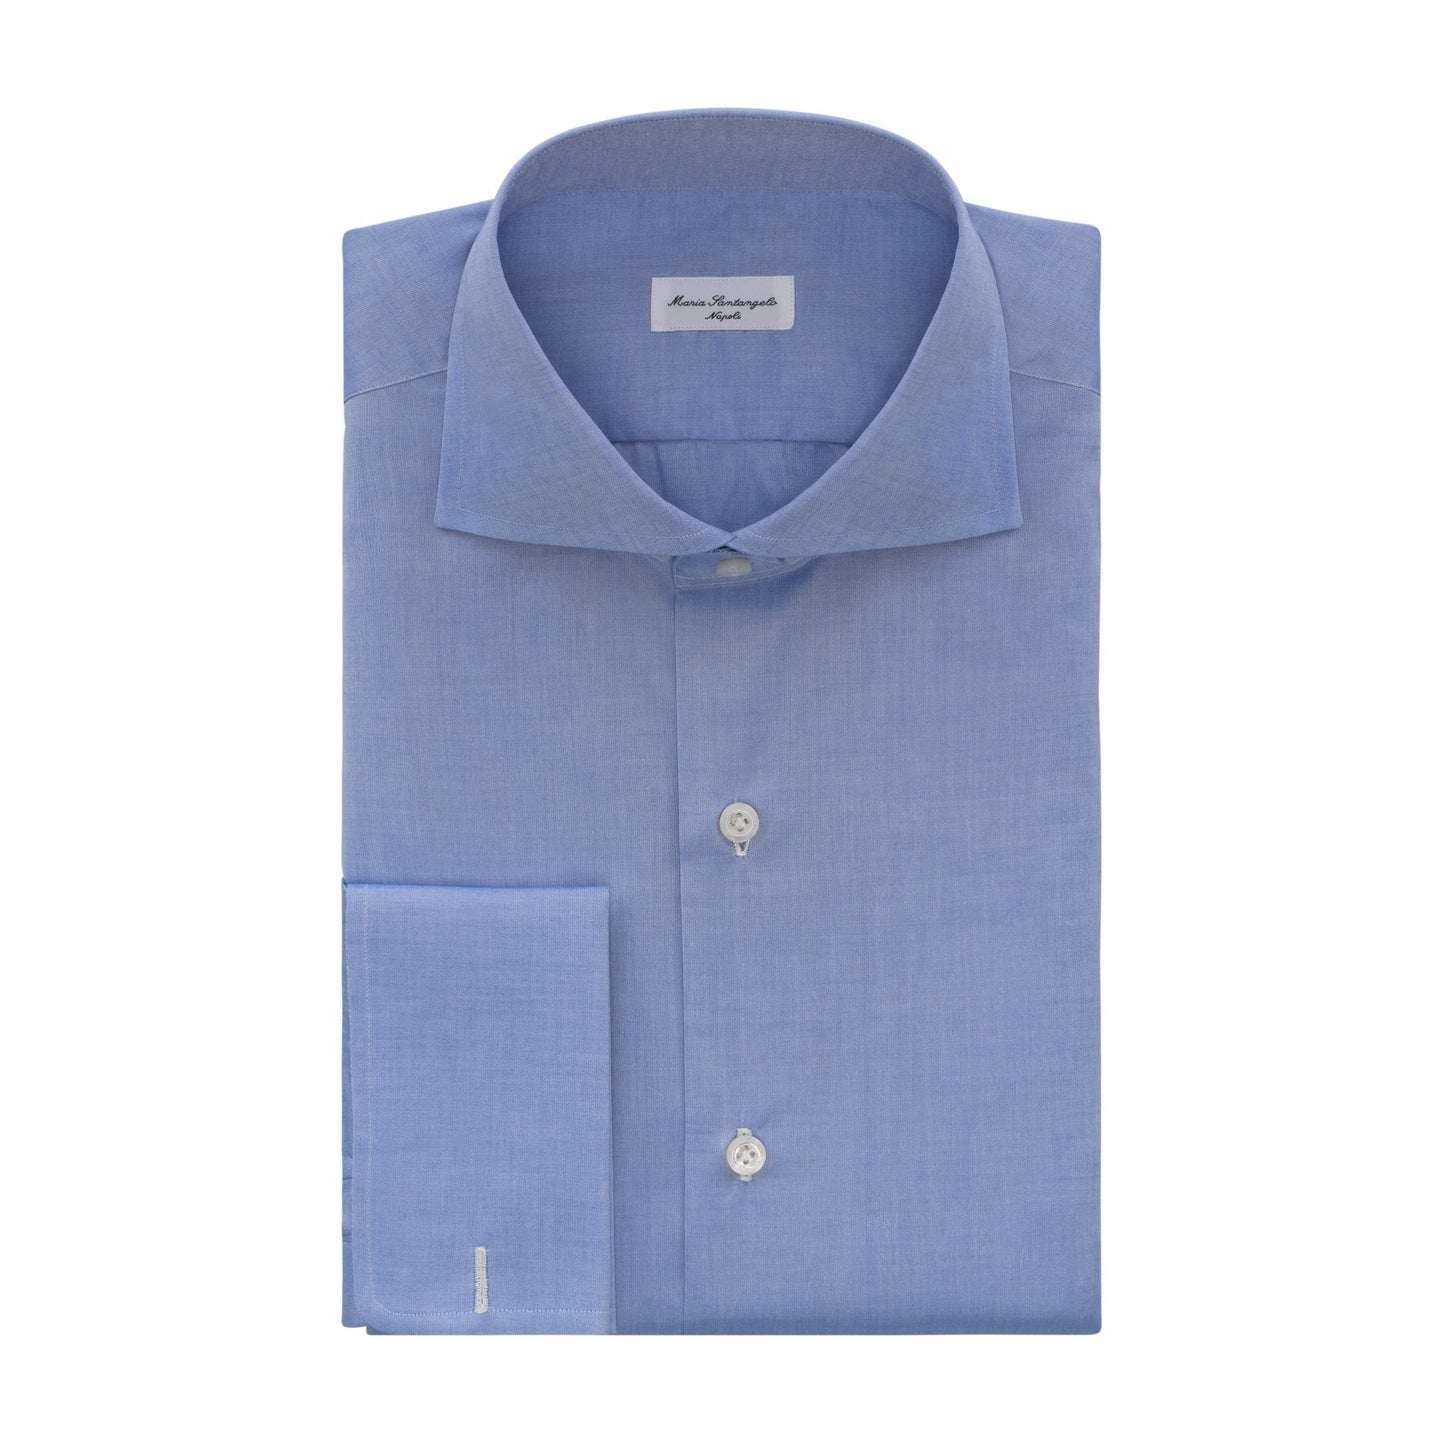 Maria Santangelo Plain Cotton Dress Shirt in Light Blue with Double Cuff - SARTALE